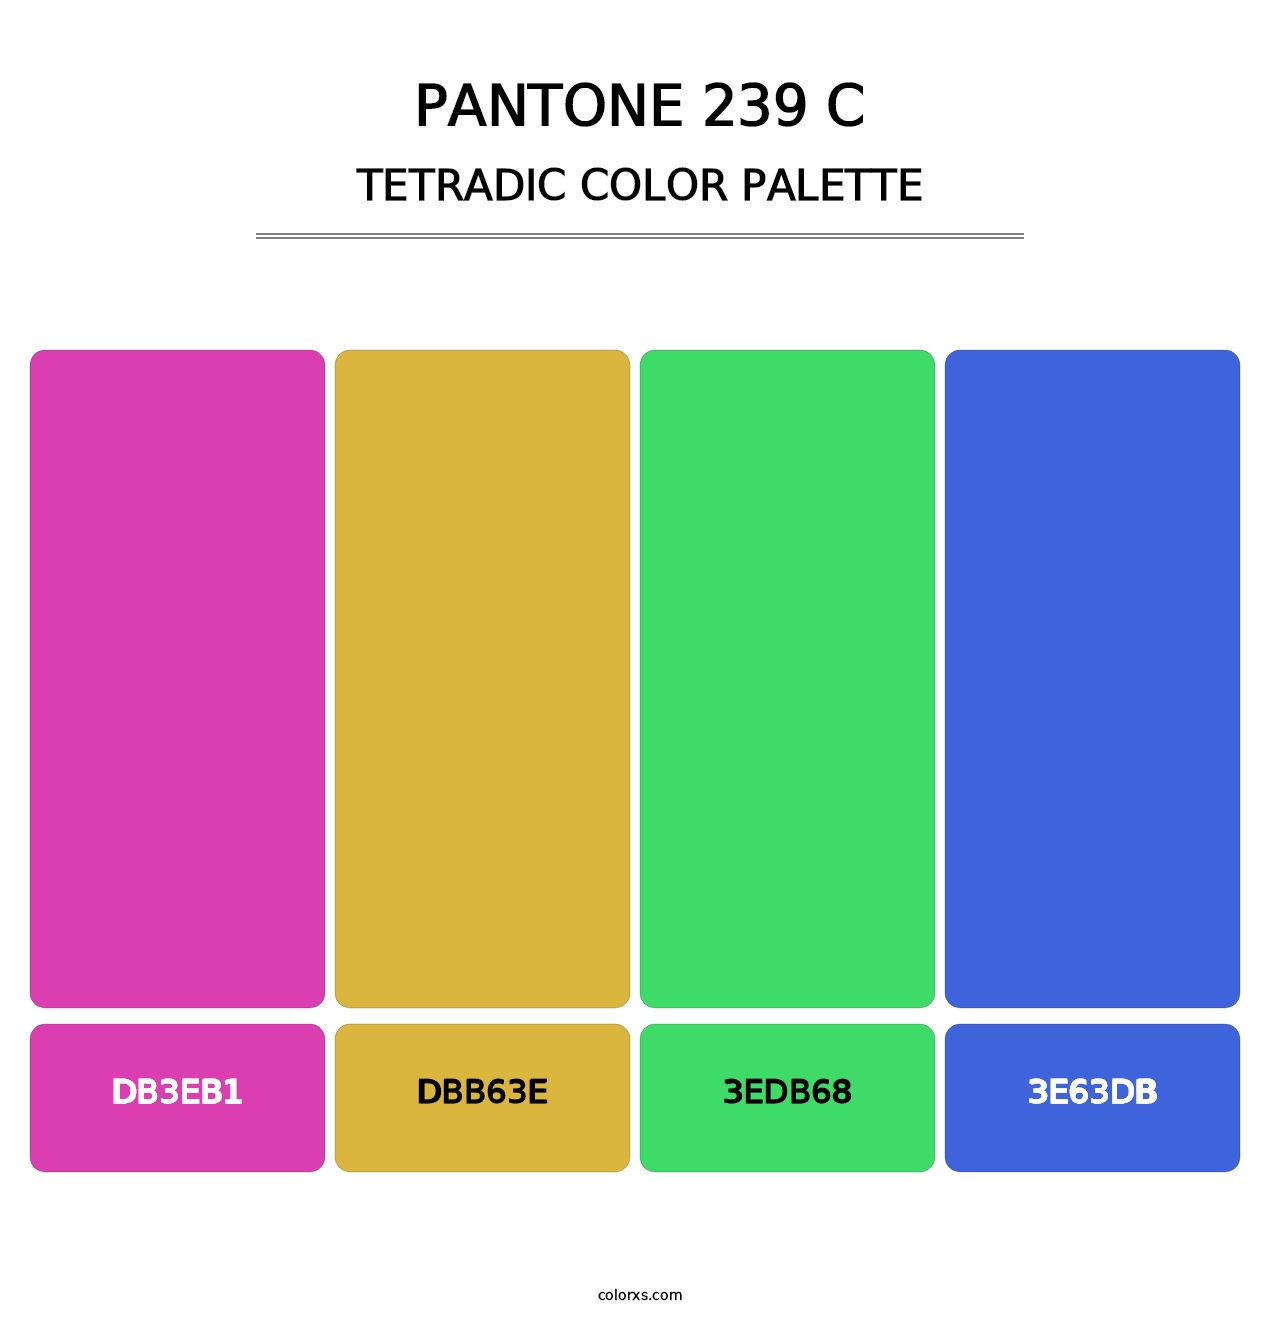 PANTONE 239 C - Tetradic Color Palette